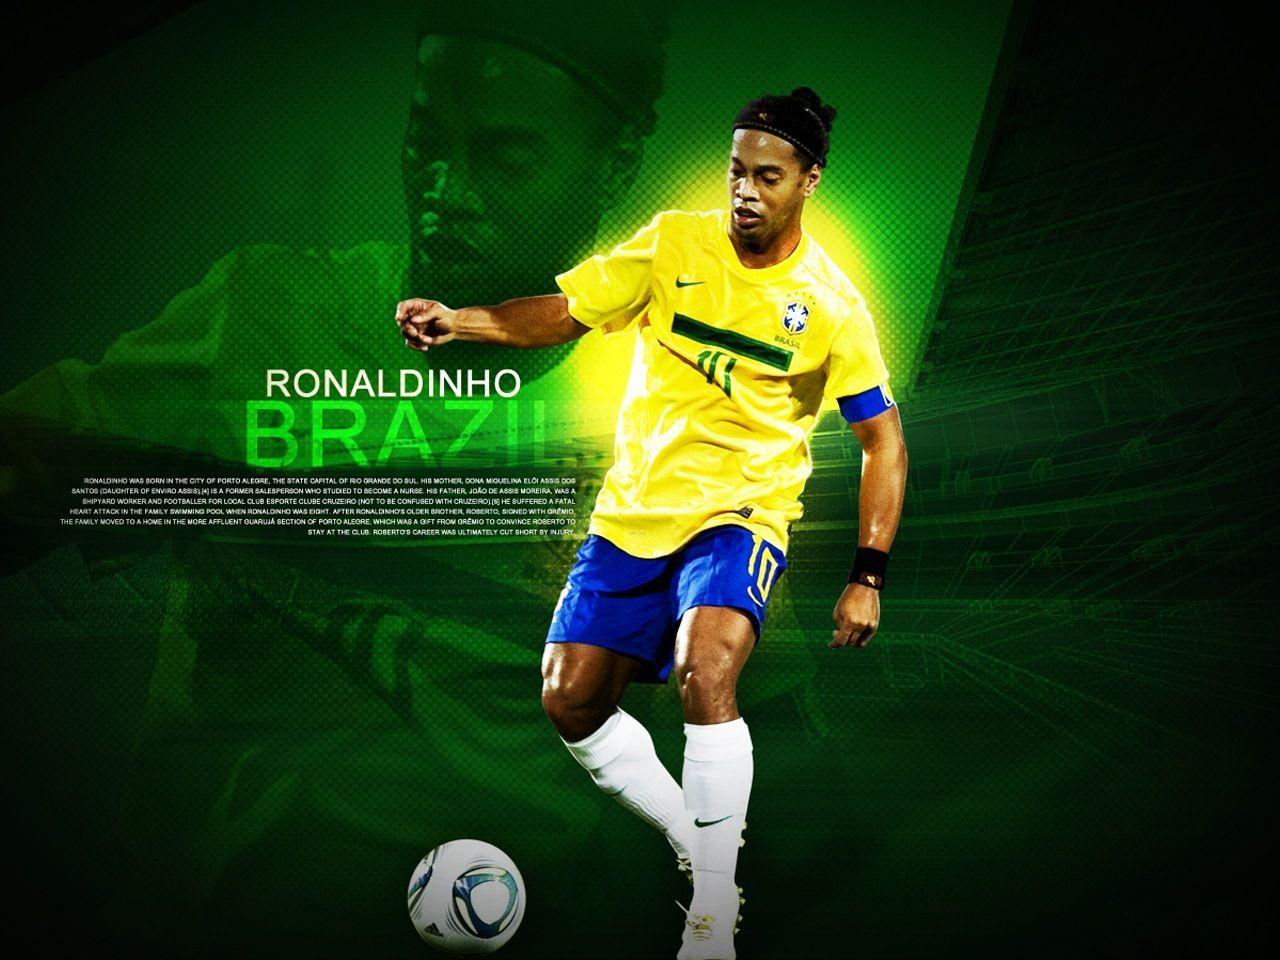 Ronaldinho Brazil HD Wallpaper. Ronaldinho HD Picture. Ronaldinho